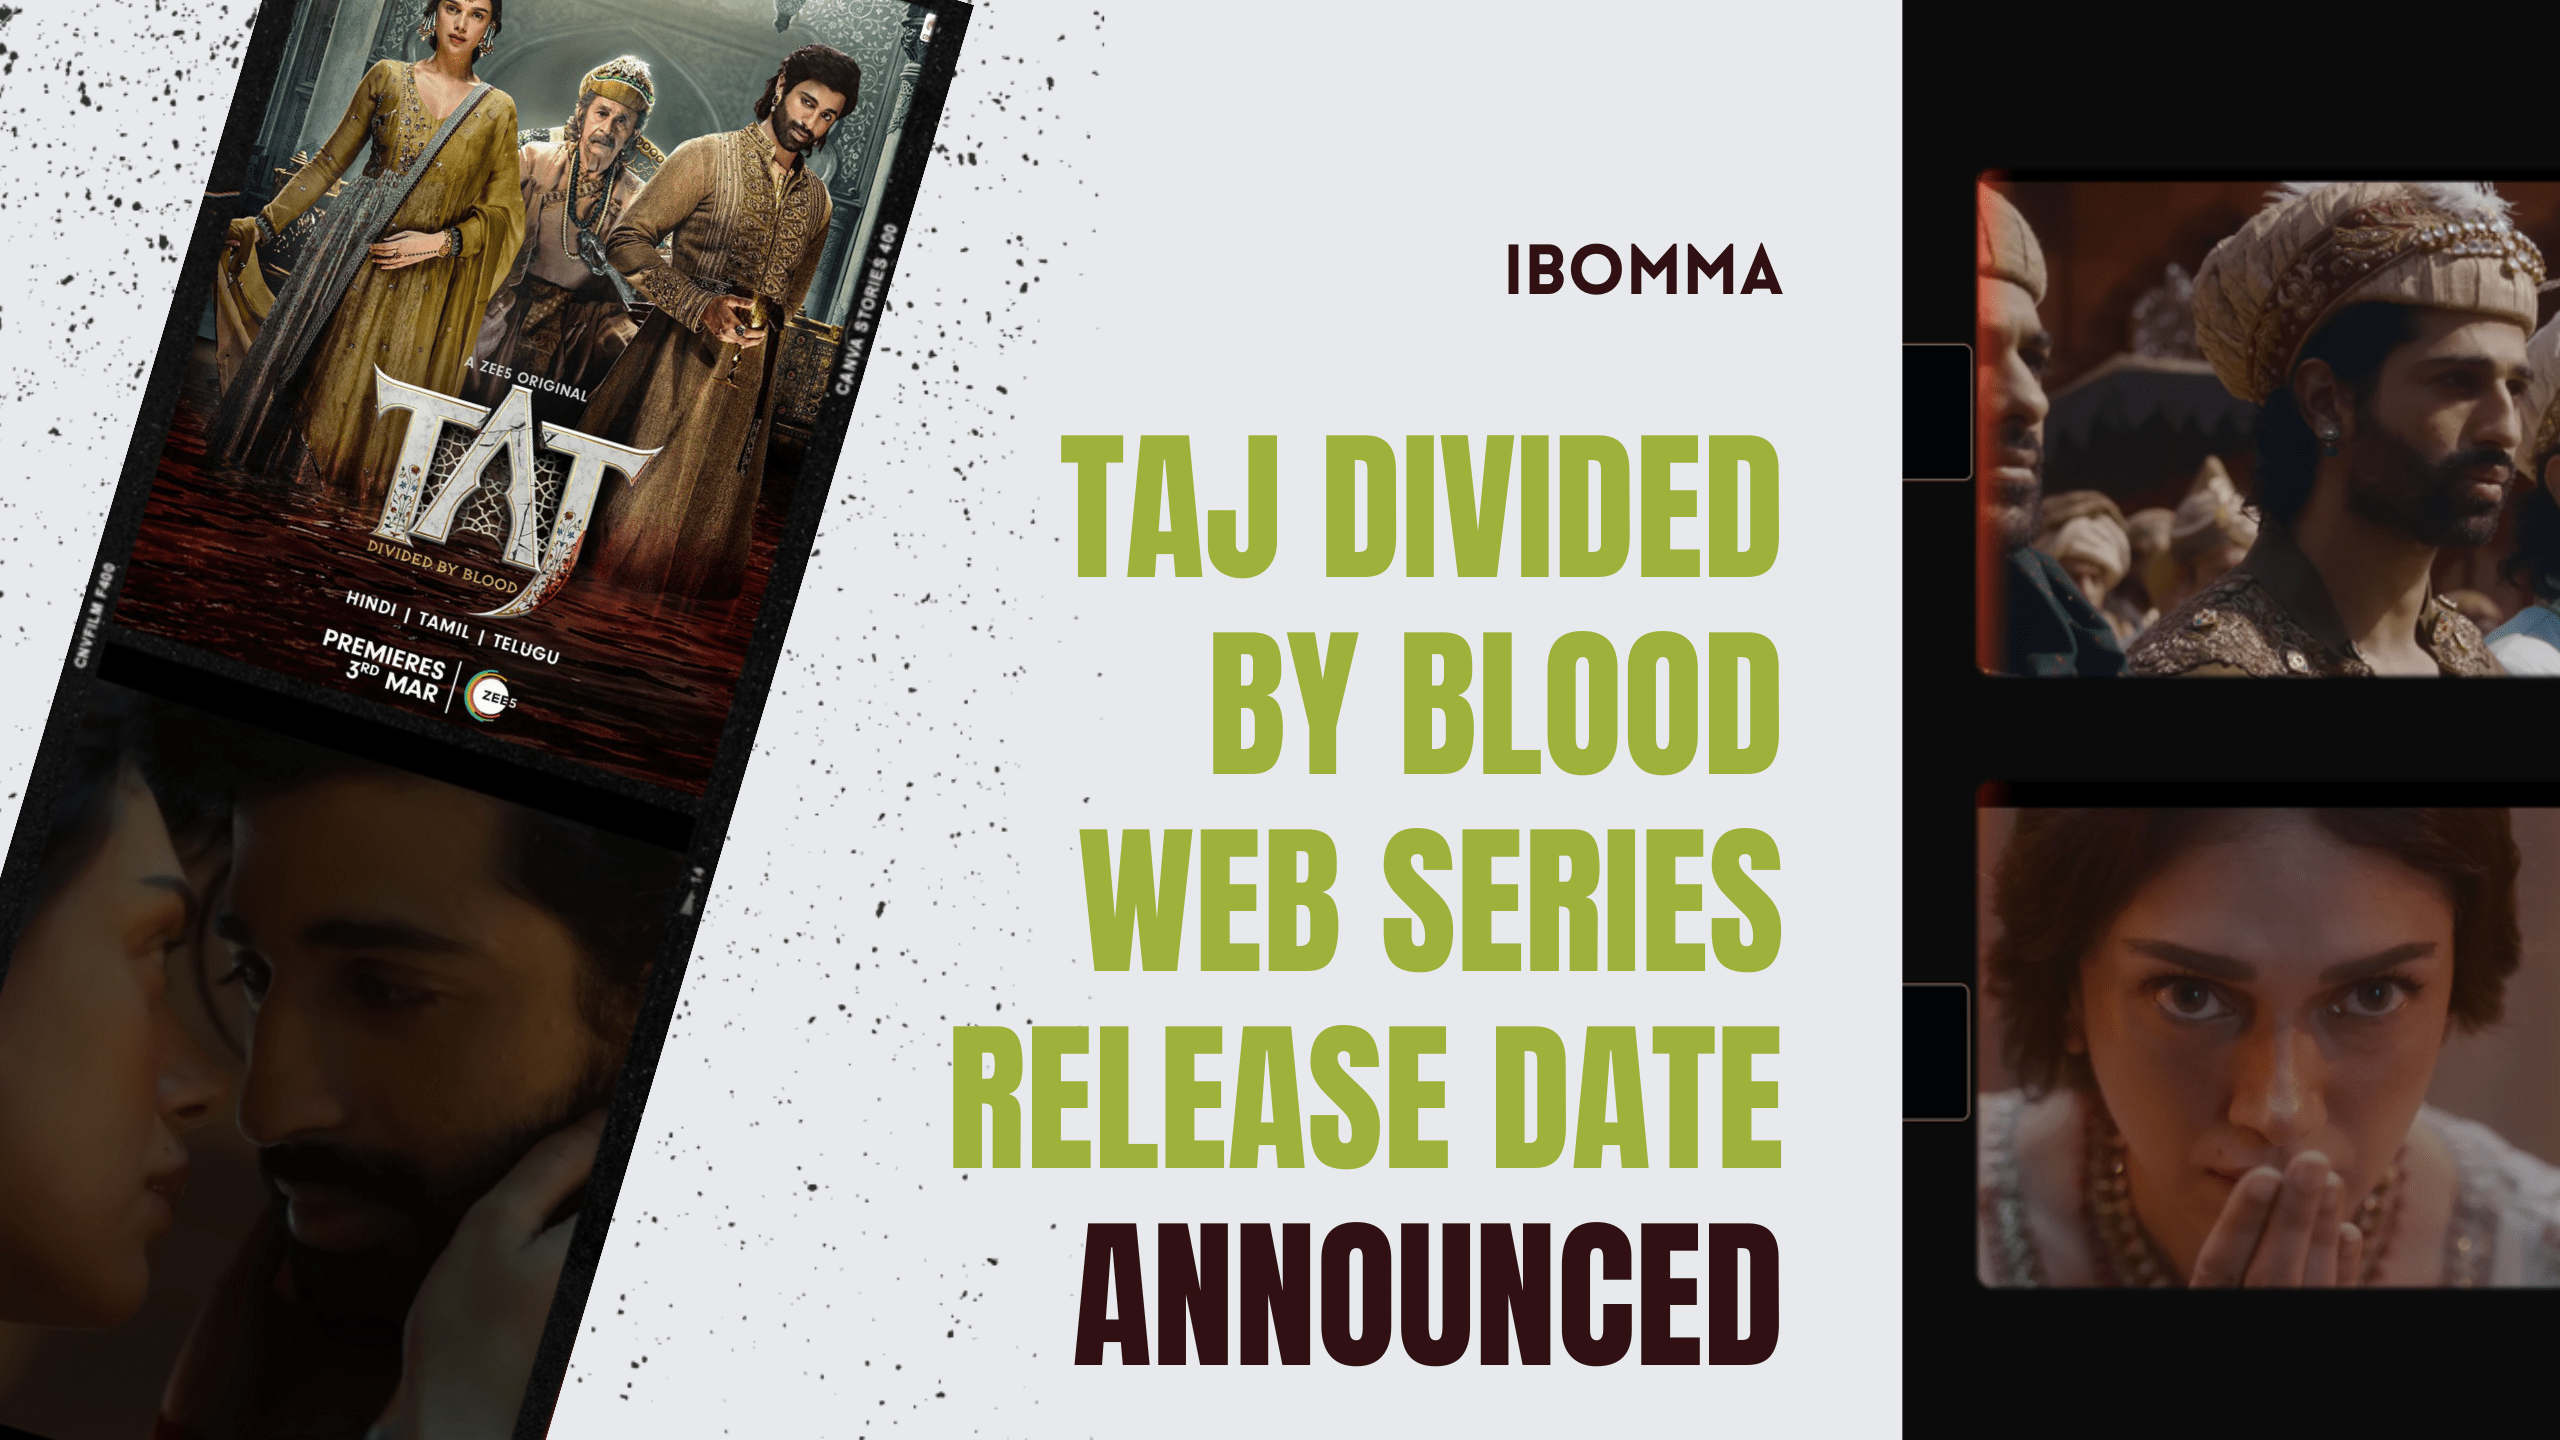 Taj Divided by Blood Web Series Release Date